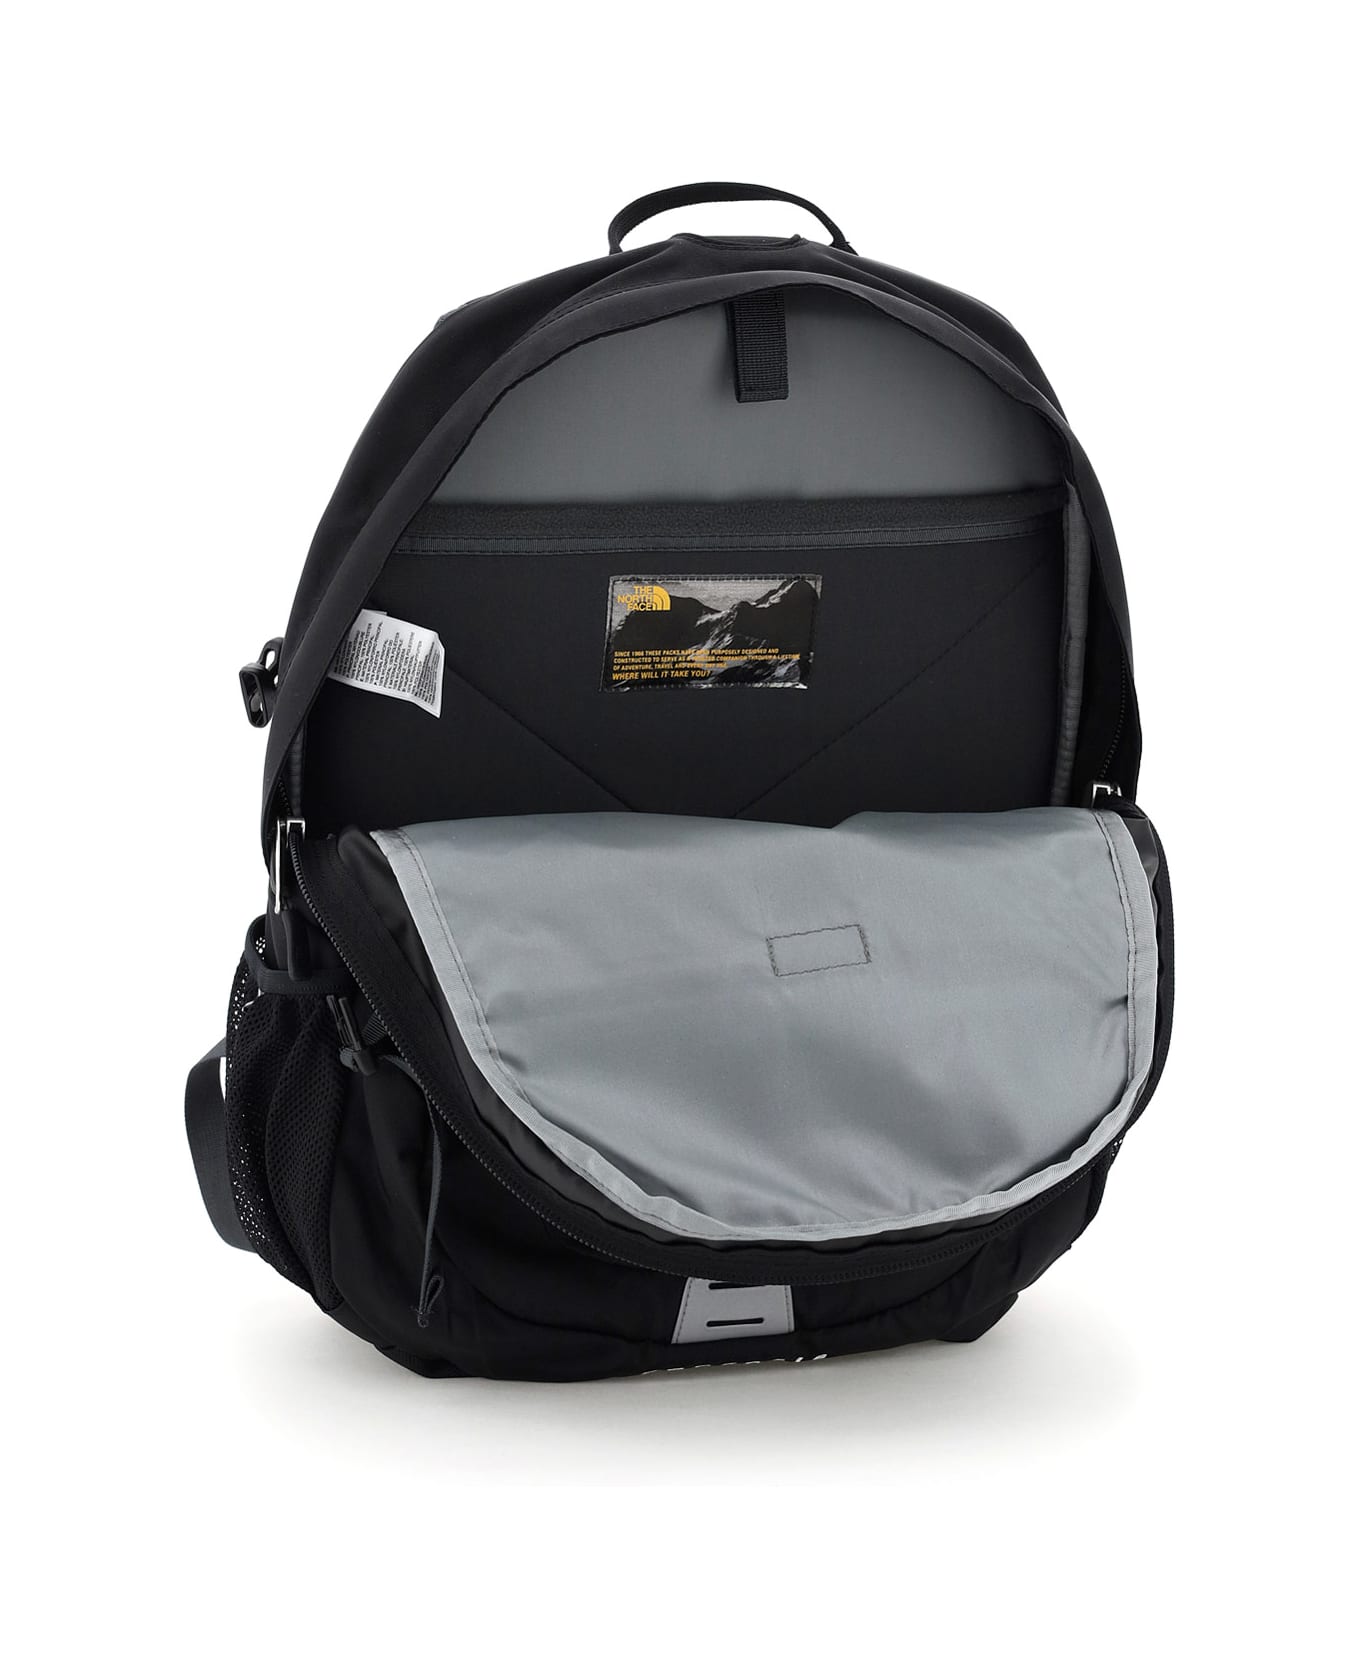 The North Face Borealis Classic Backpack - TNF BLACK ASPHALT GREY (Black)